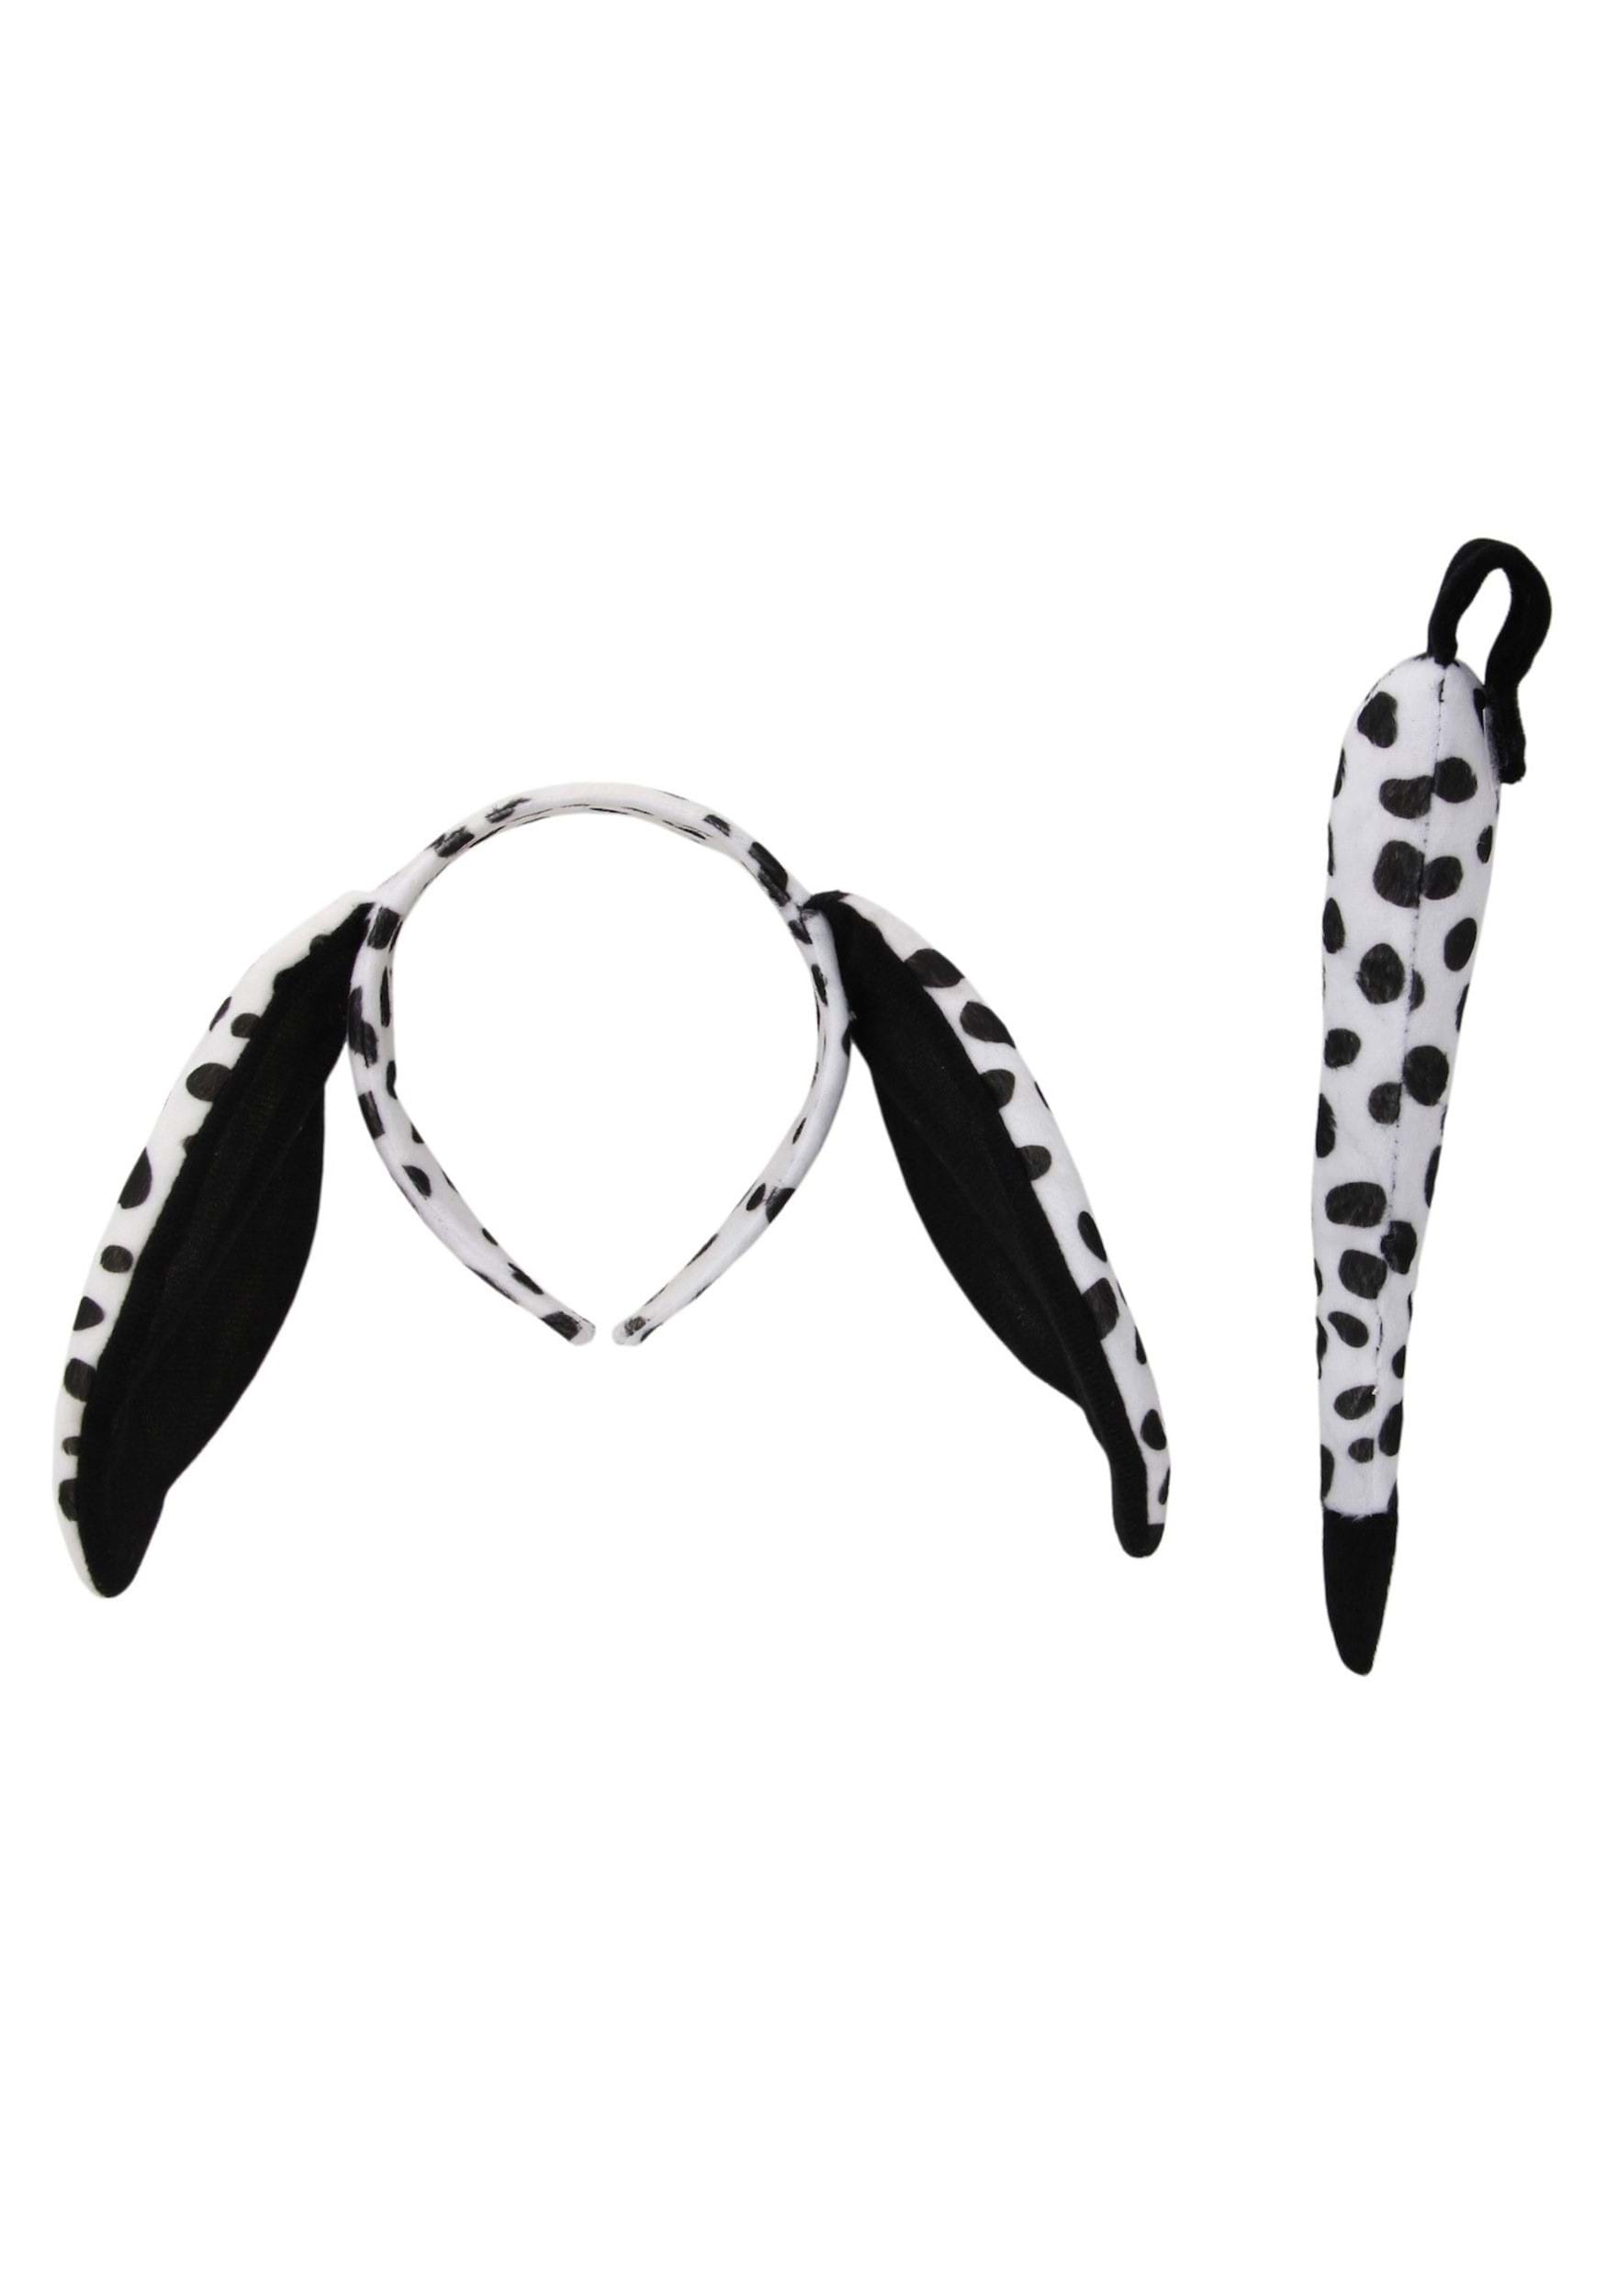 Dalmatian Ears & Tail Accessory Set